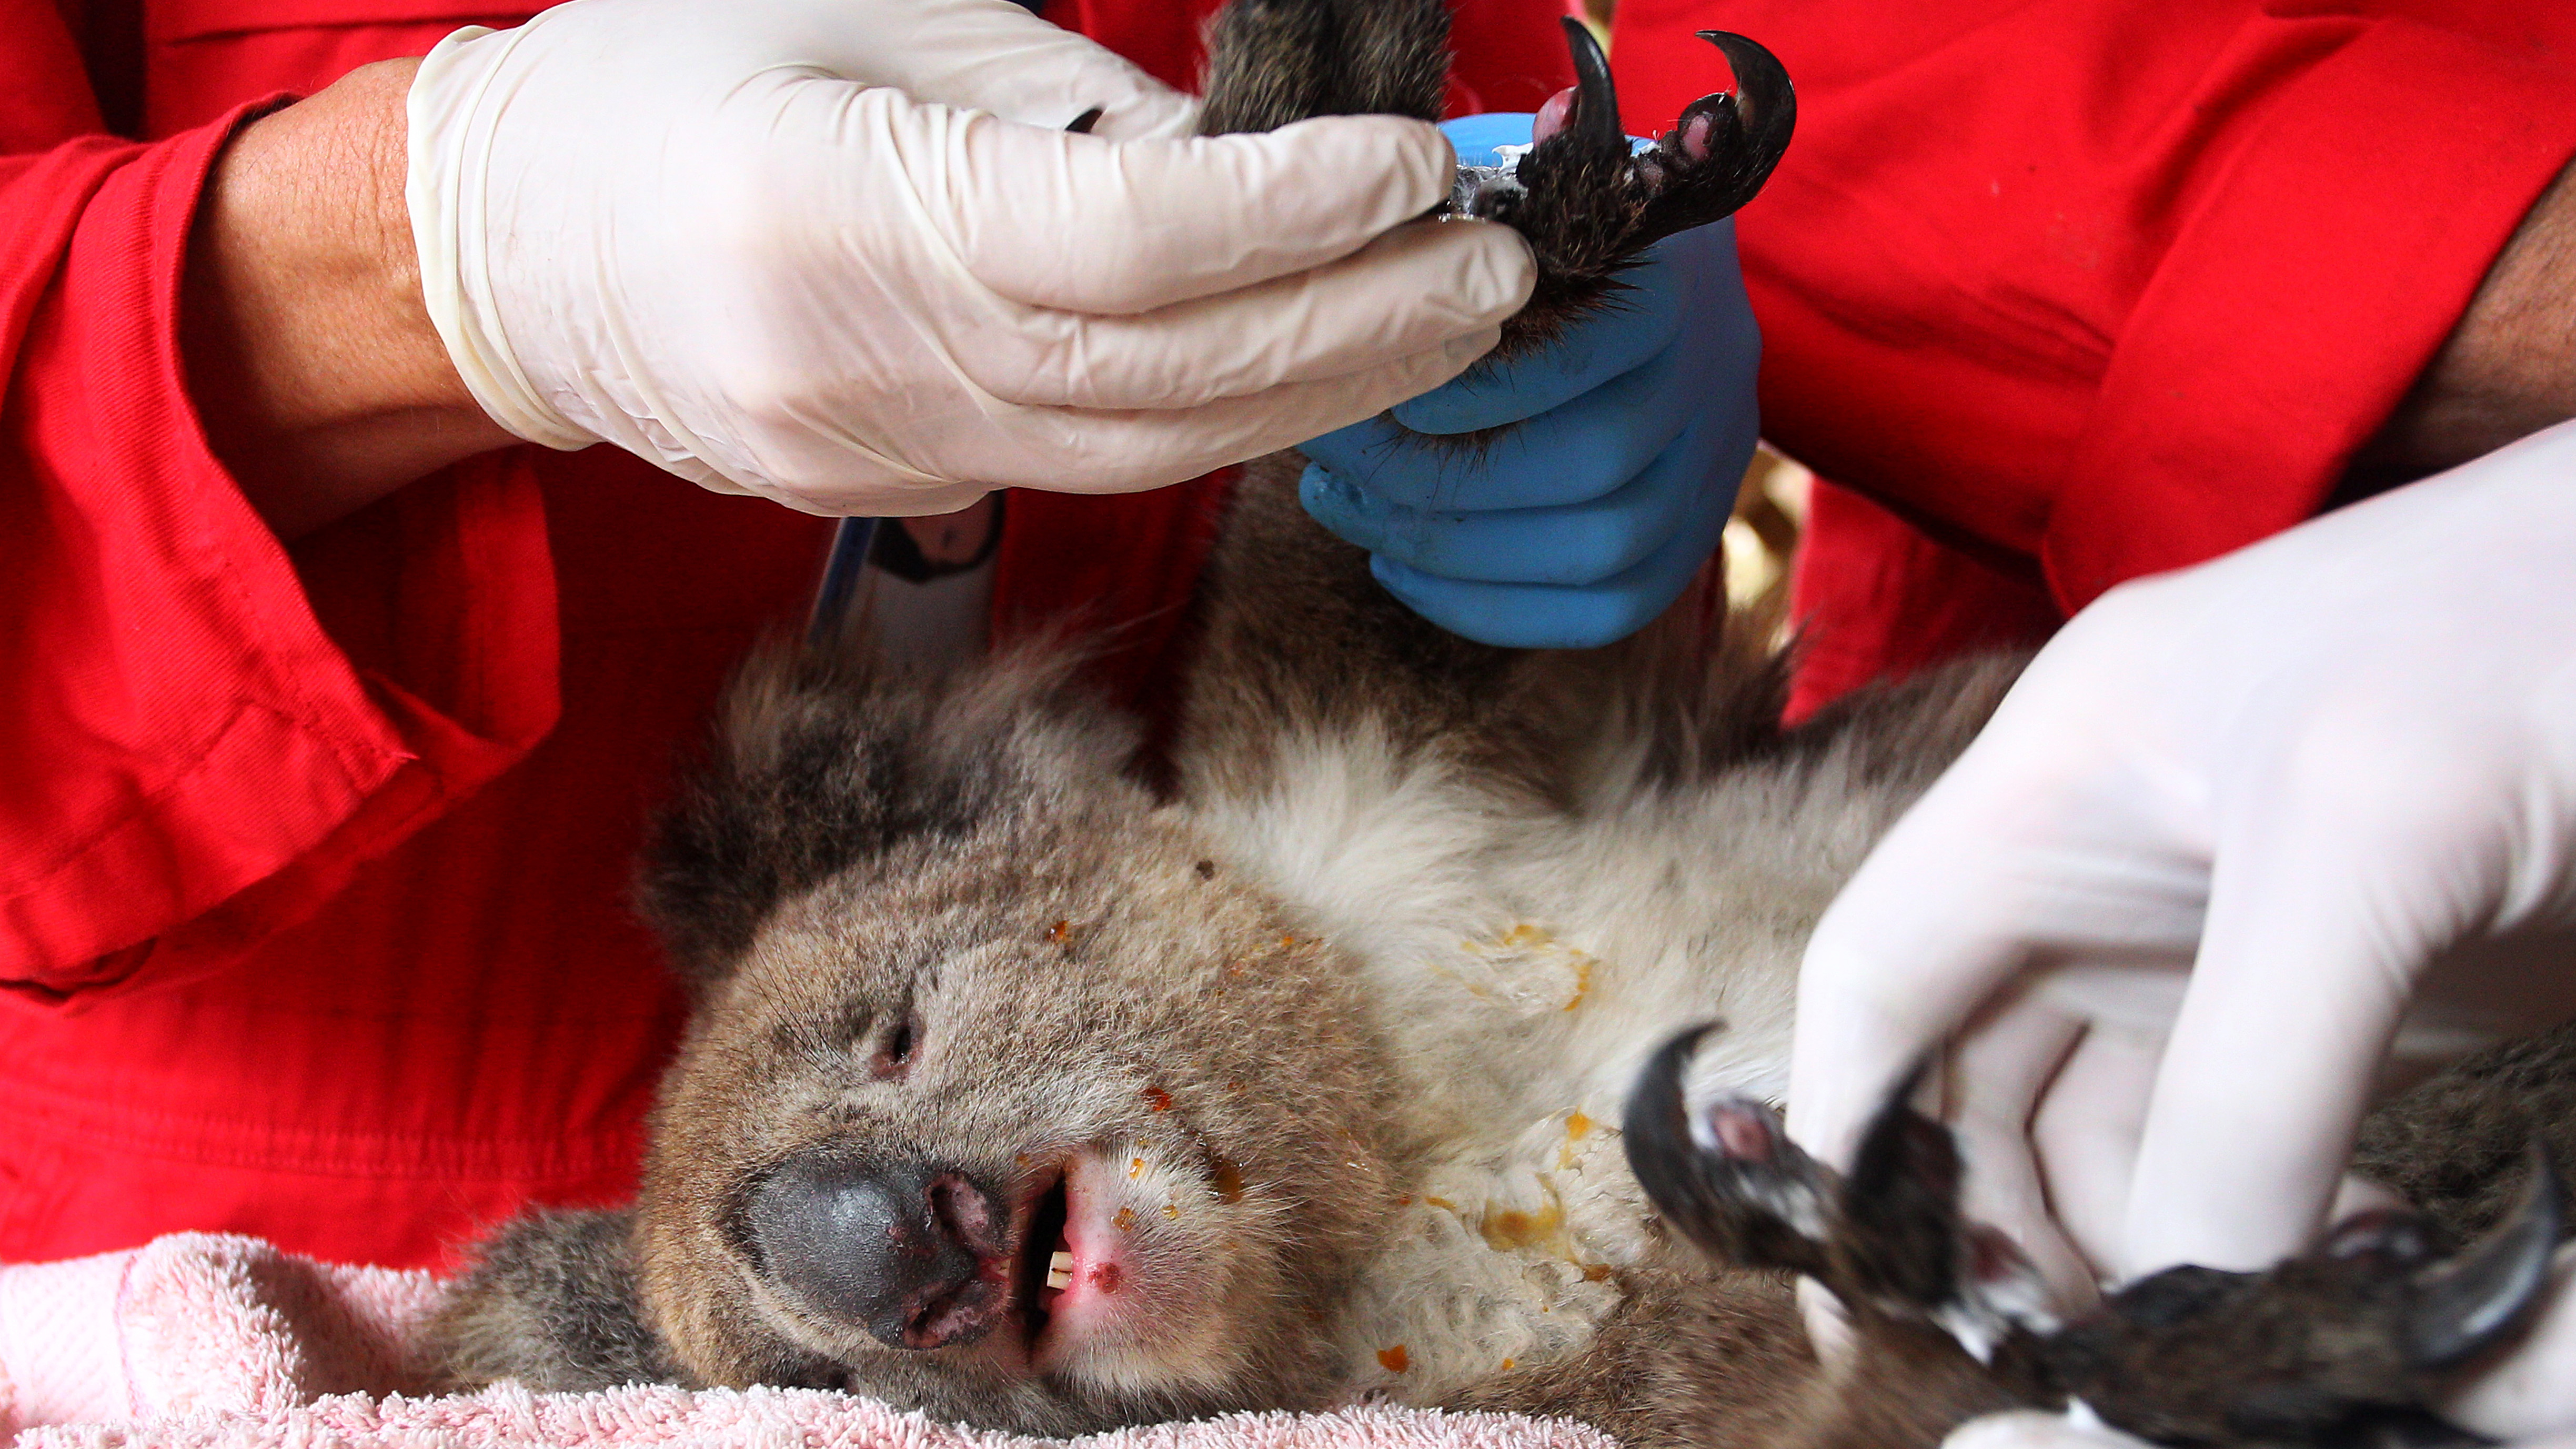 An injured koala is treated at the Kangaroo Island Wildlife Zoo in January 2020.